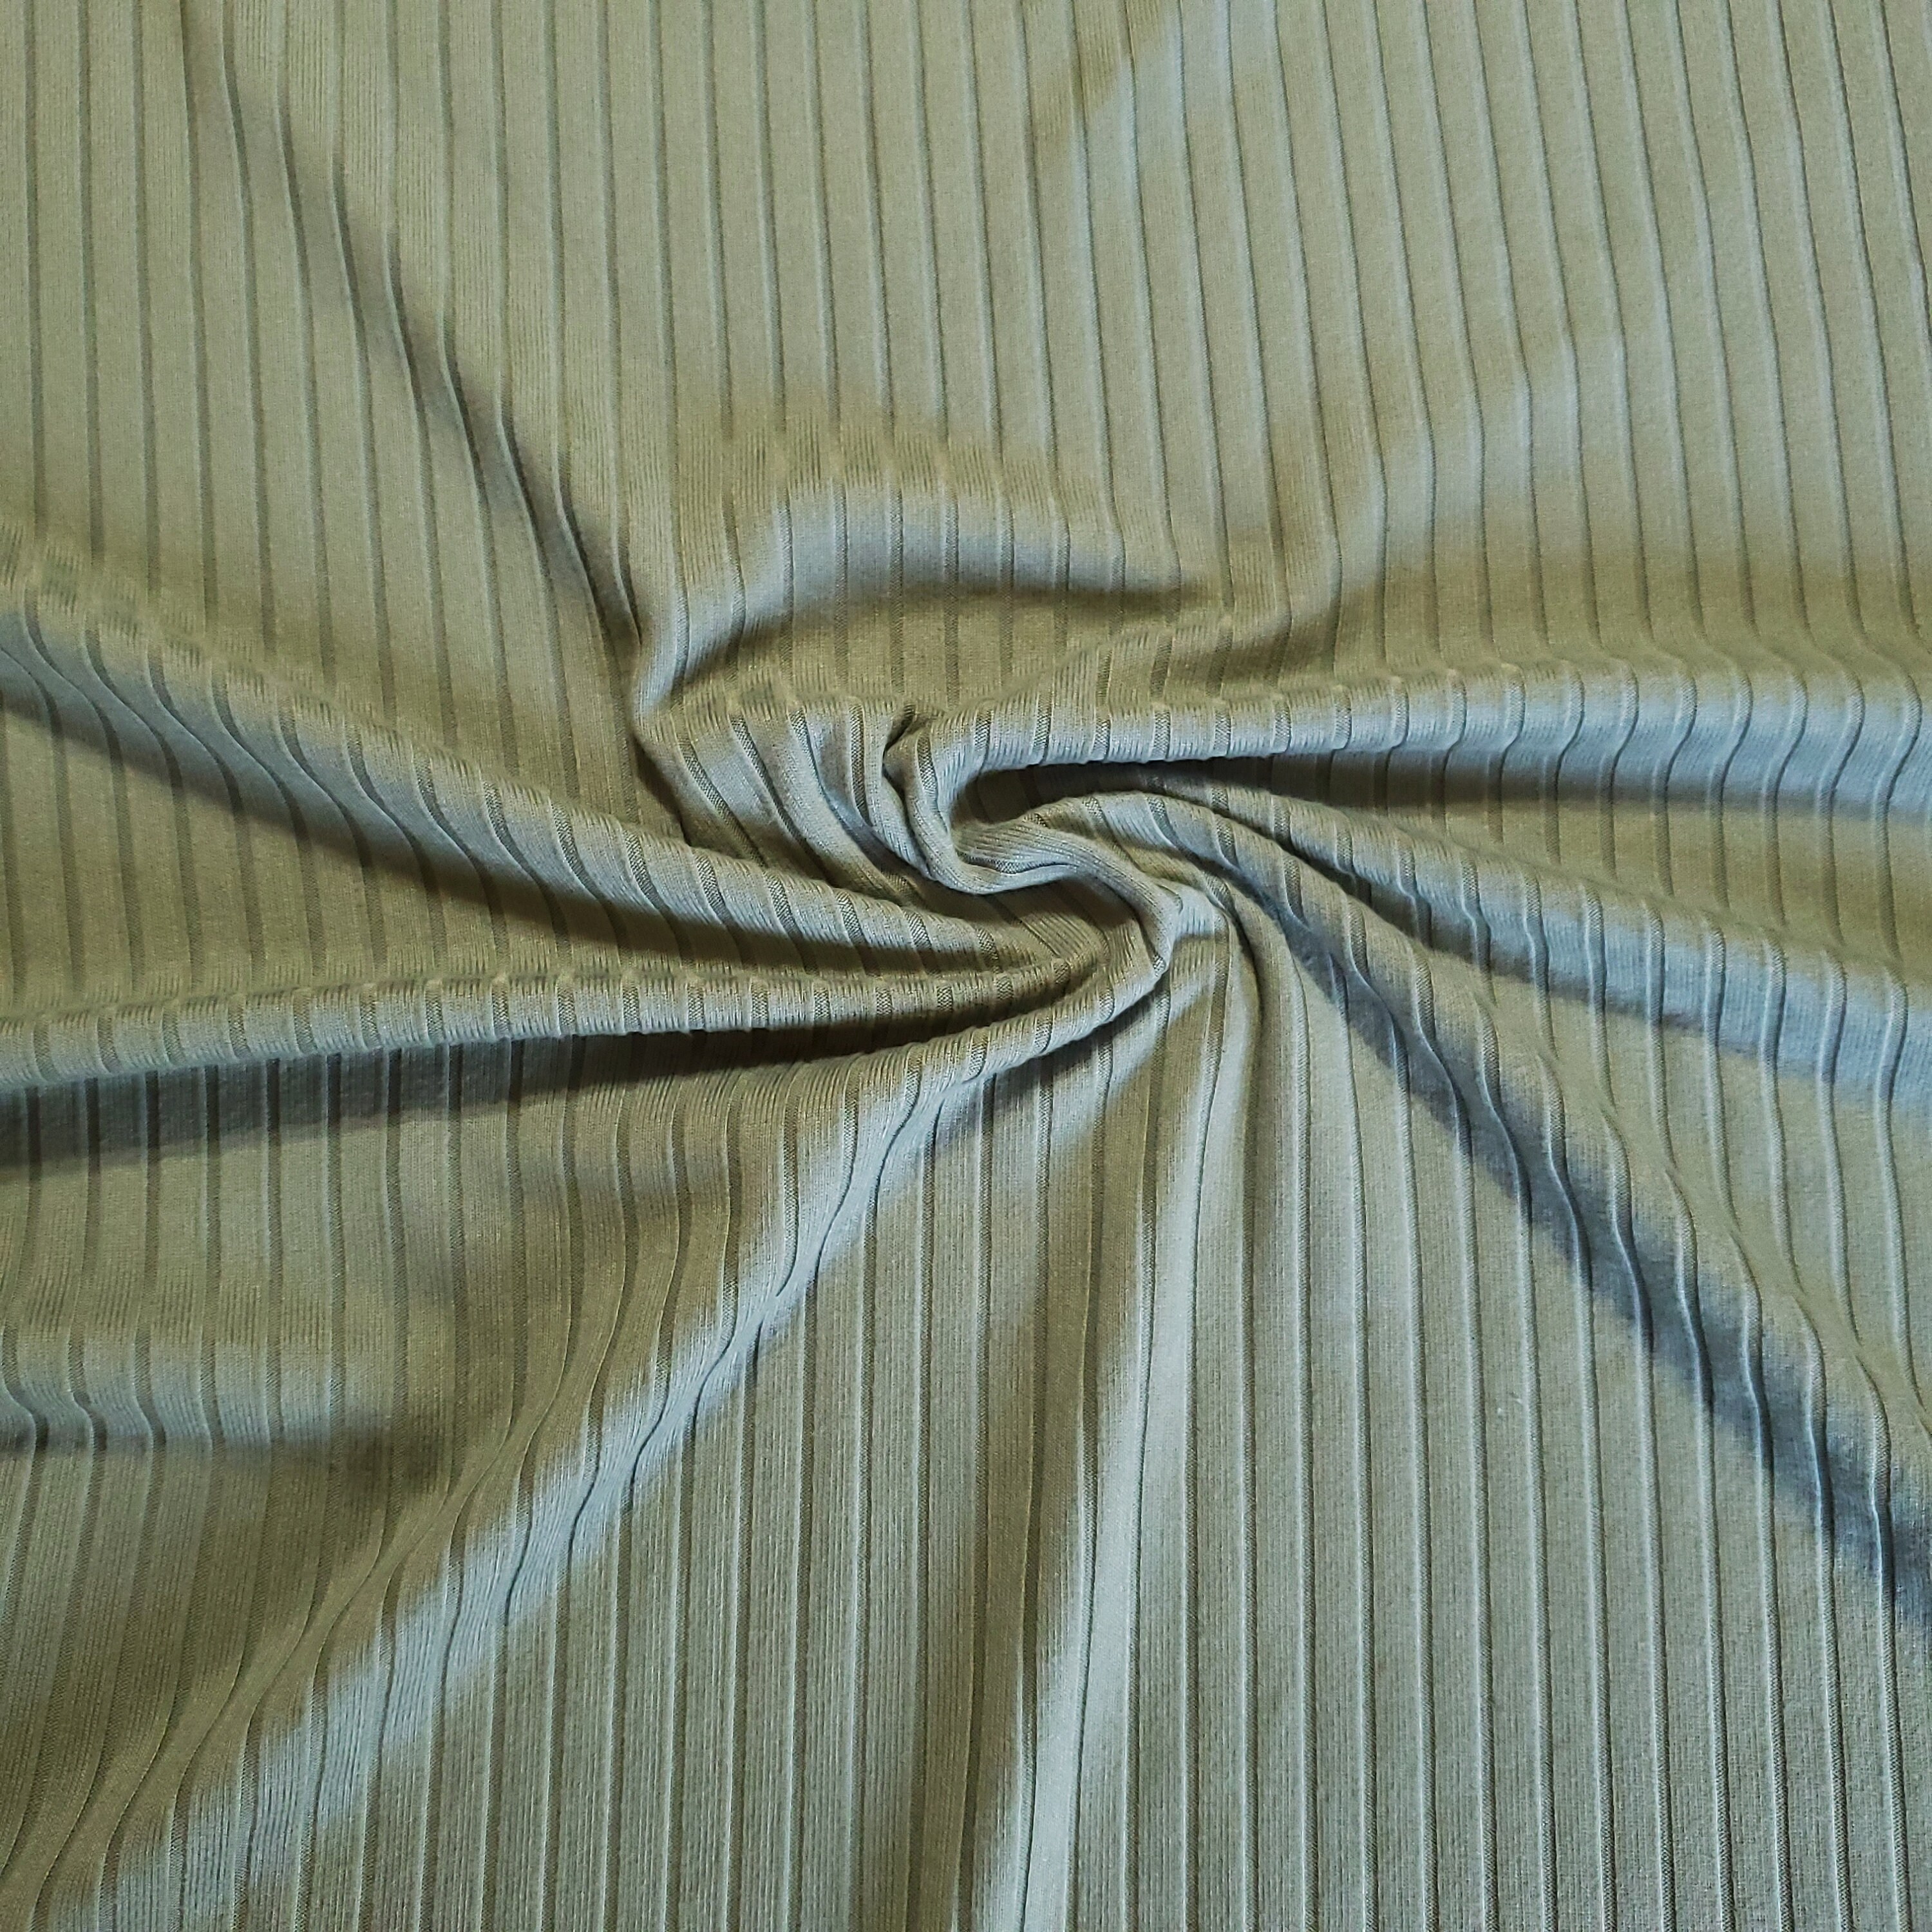 Rib Knit Fabric by the Yard Ribbed Jersey Stretchy Soft Polyester Stretch  Fabric 1 Yardrbkc101 